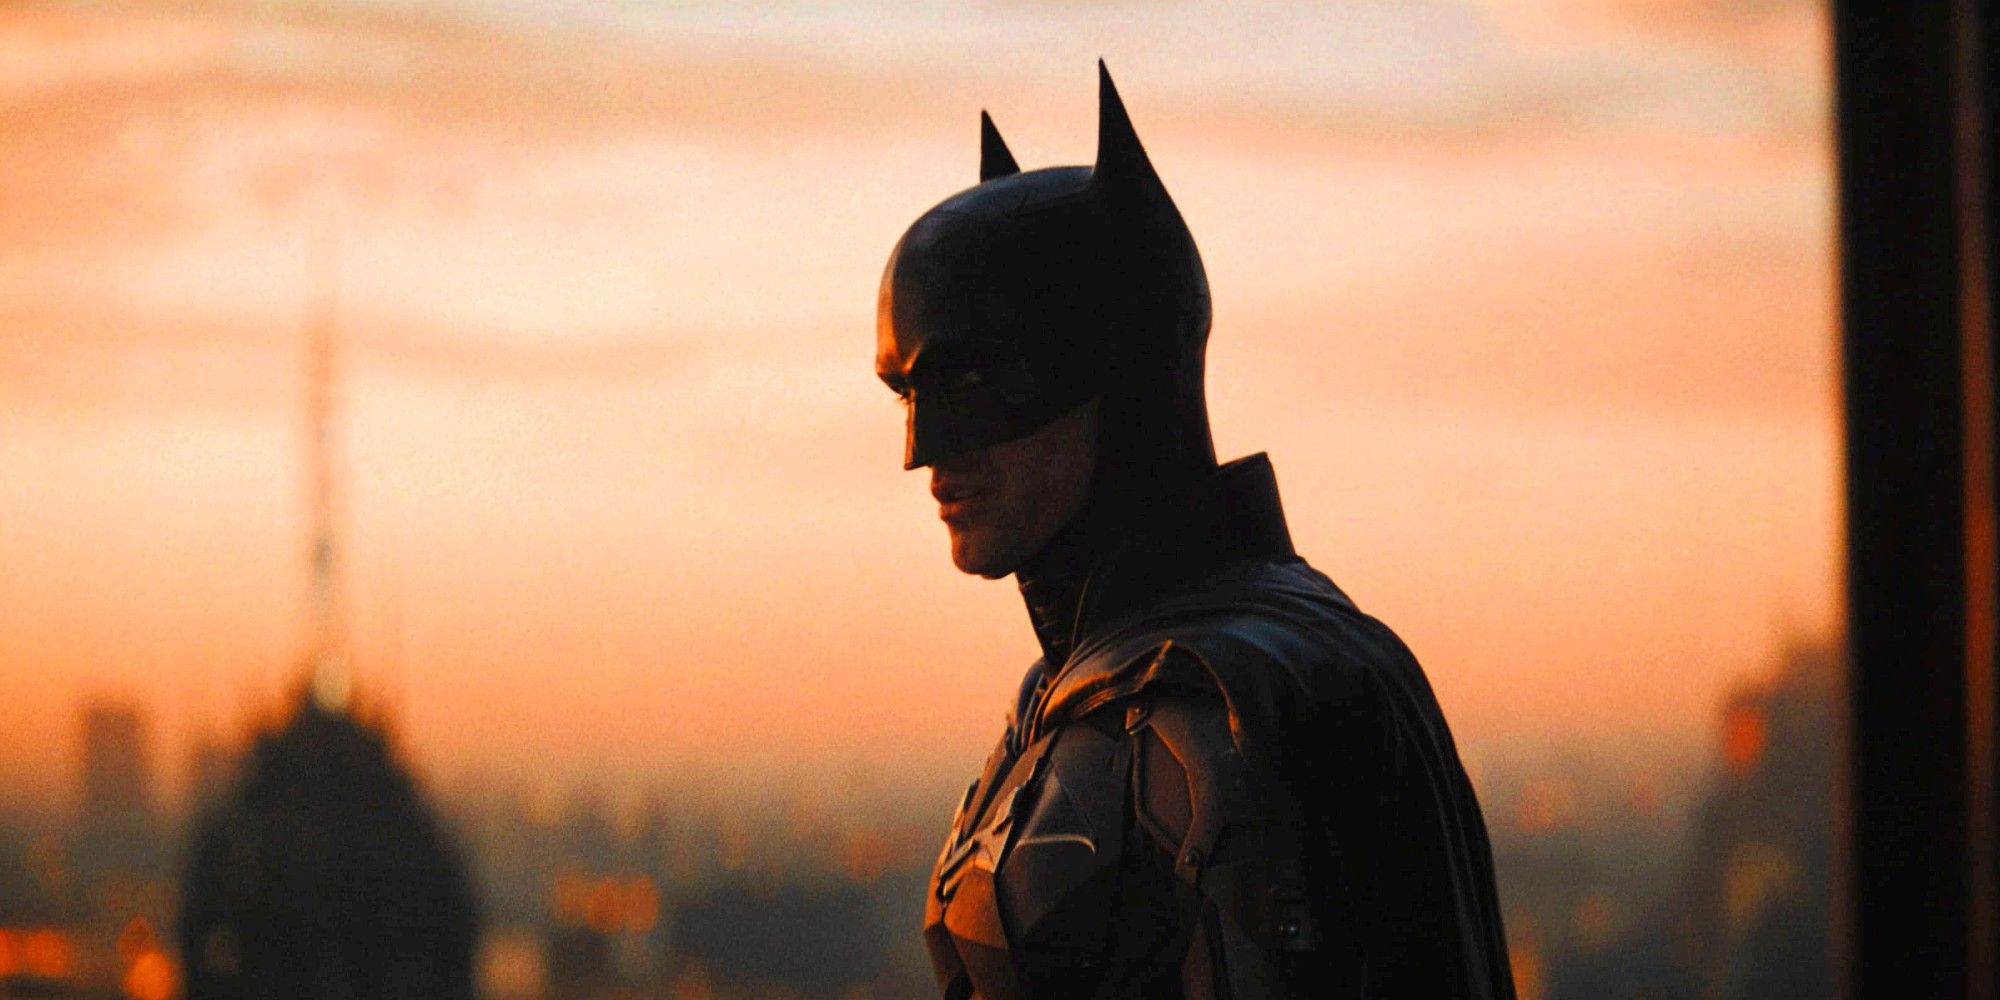 Robert Pattinson as Batman in The Batman looking over Gotham